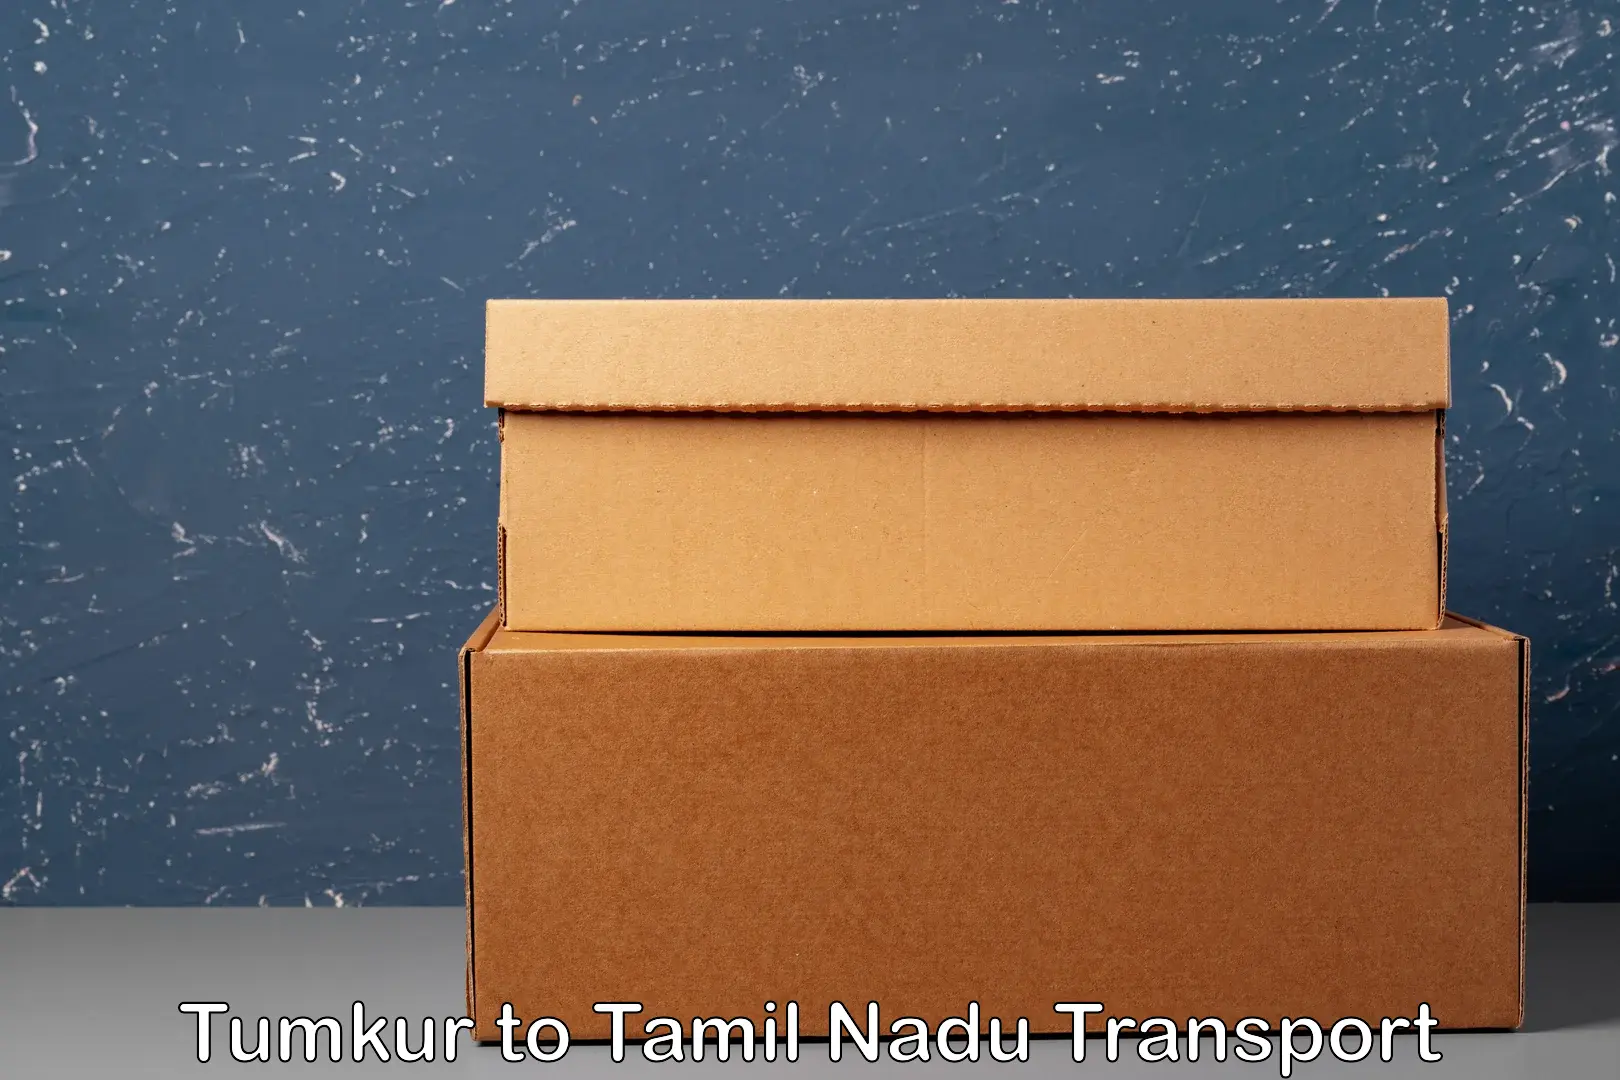 Transport shared services Tumkur to Thanjavur